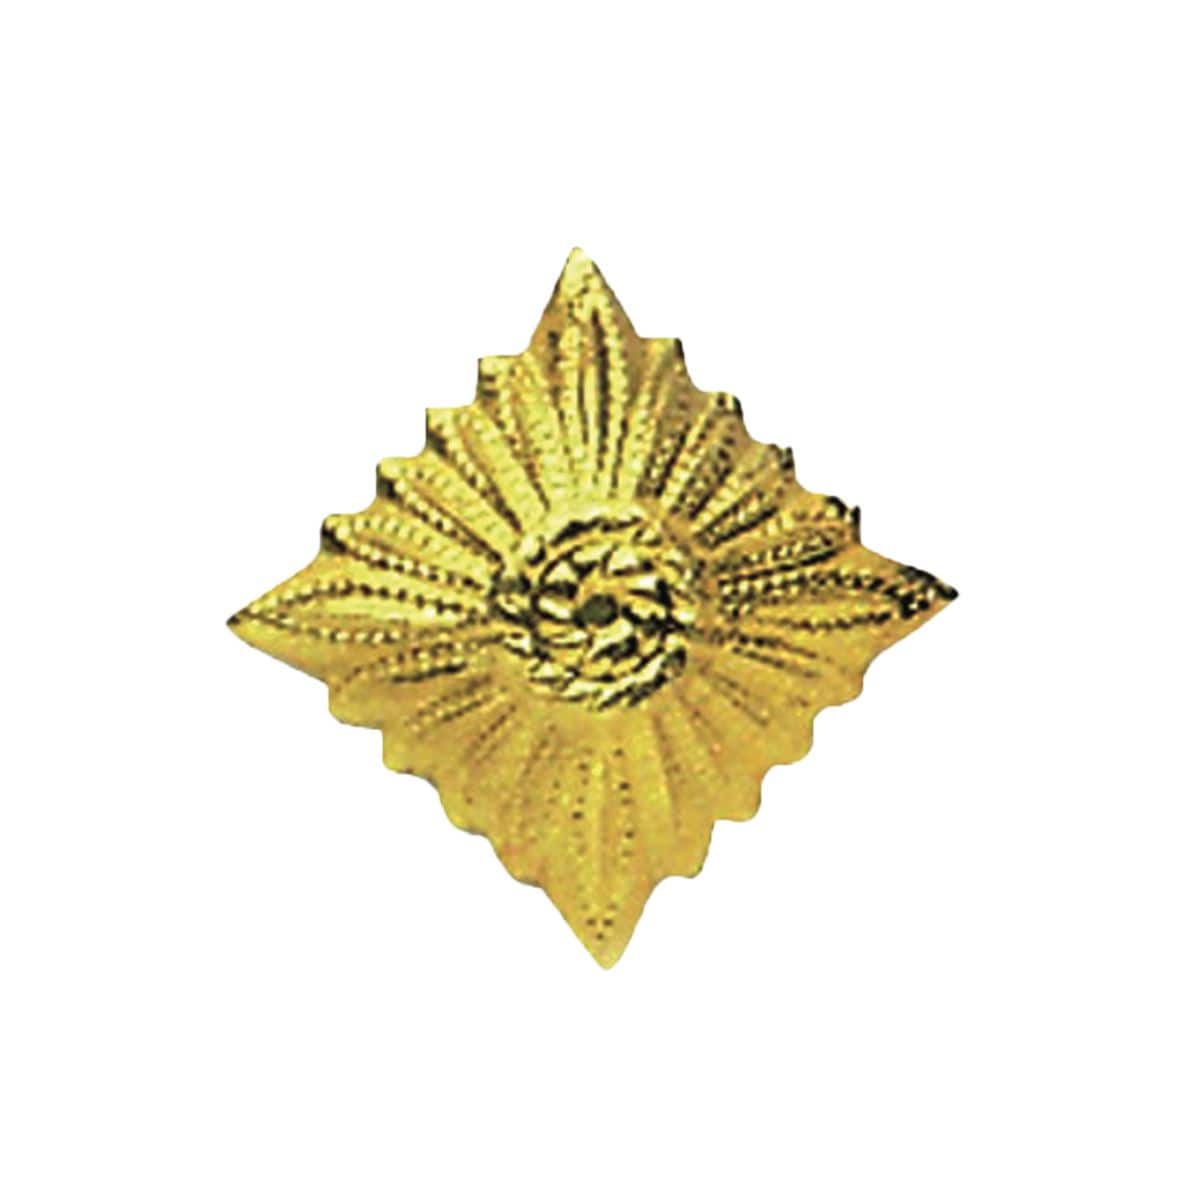 Purchase the NVA Rank Insignia Star gold by ASMC